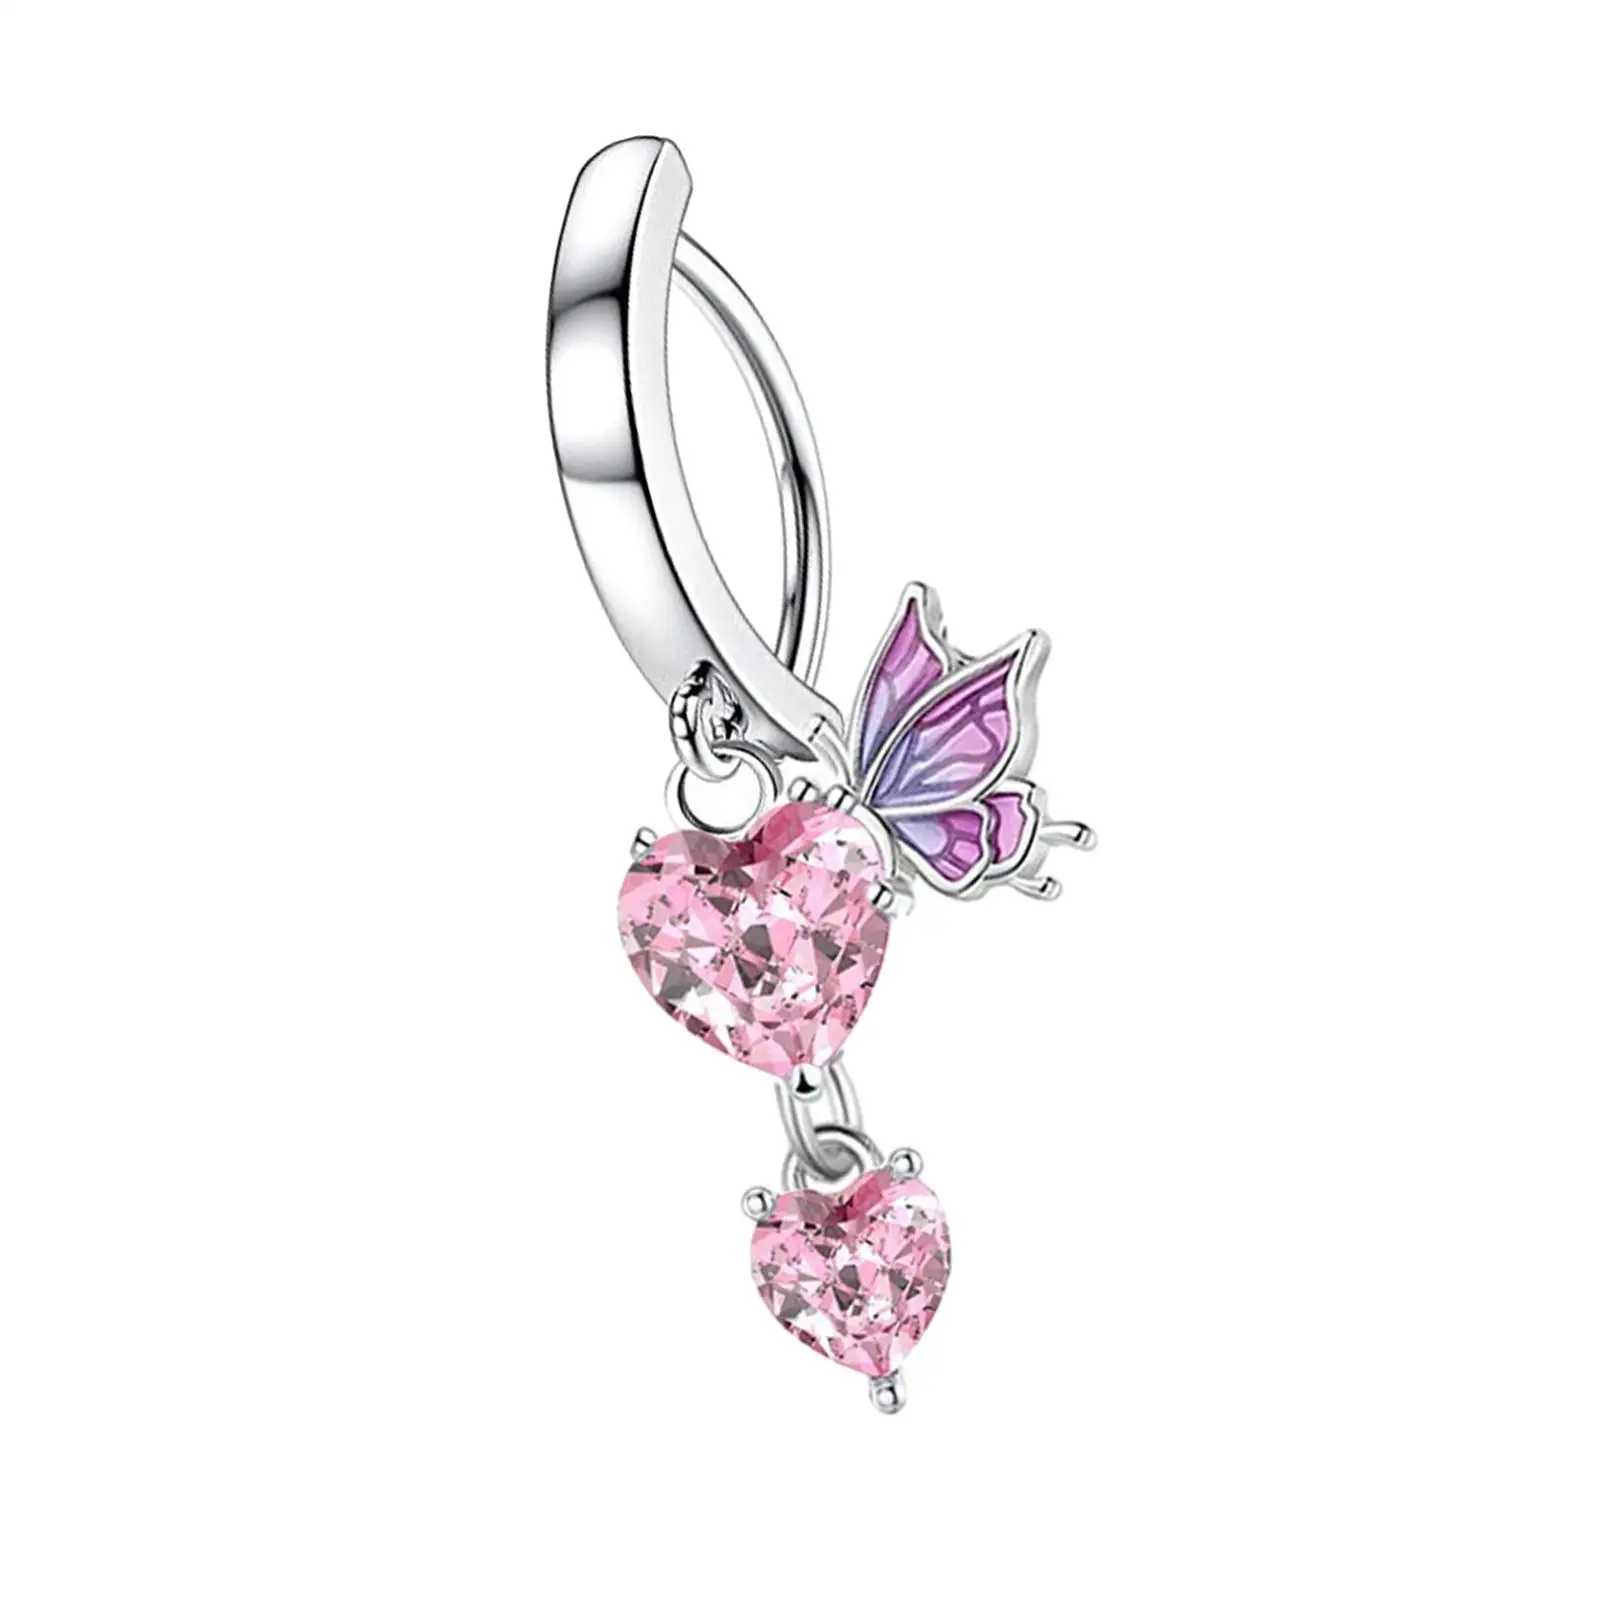 Piercing Jewelry Statement Stylish Jewelry Accessories Body Jewelry for Birthday Valentine`s Day Christmas Halloween Anniversary